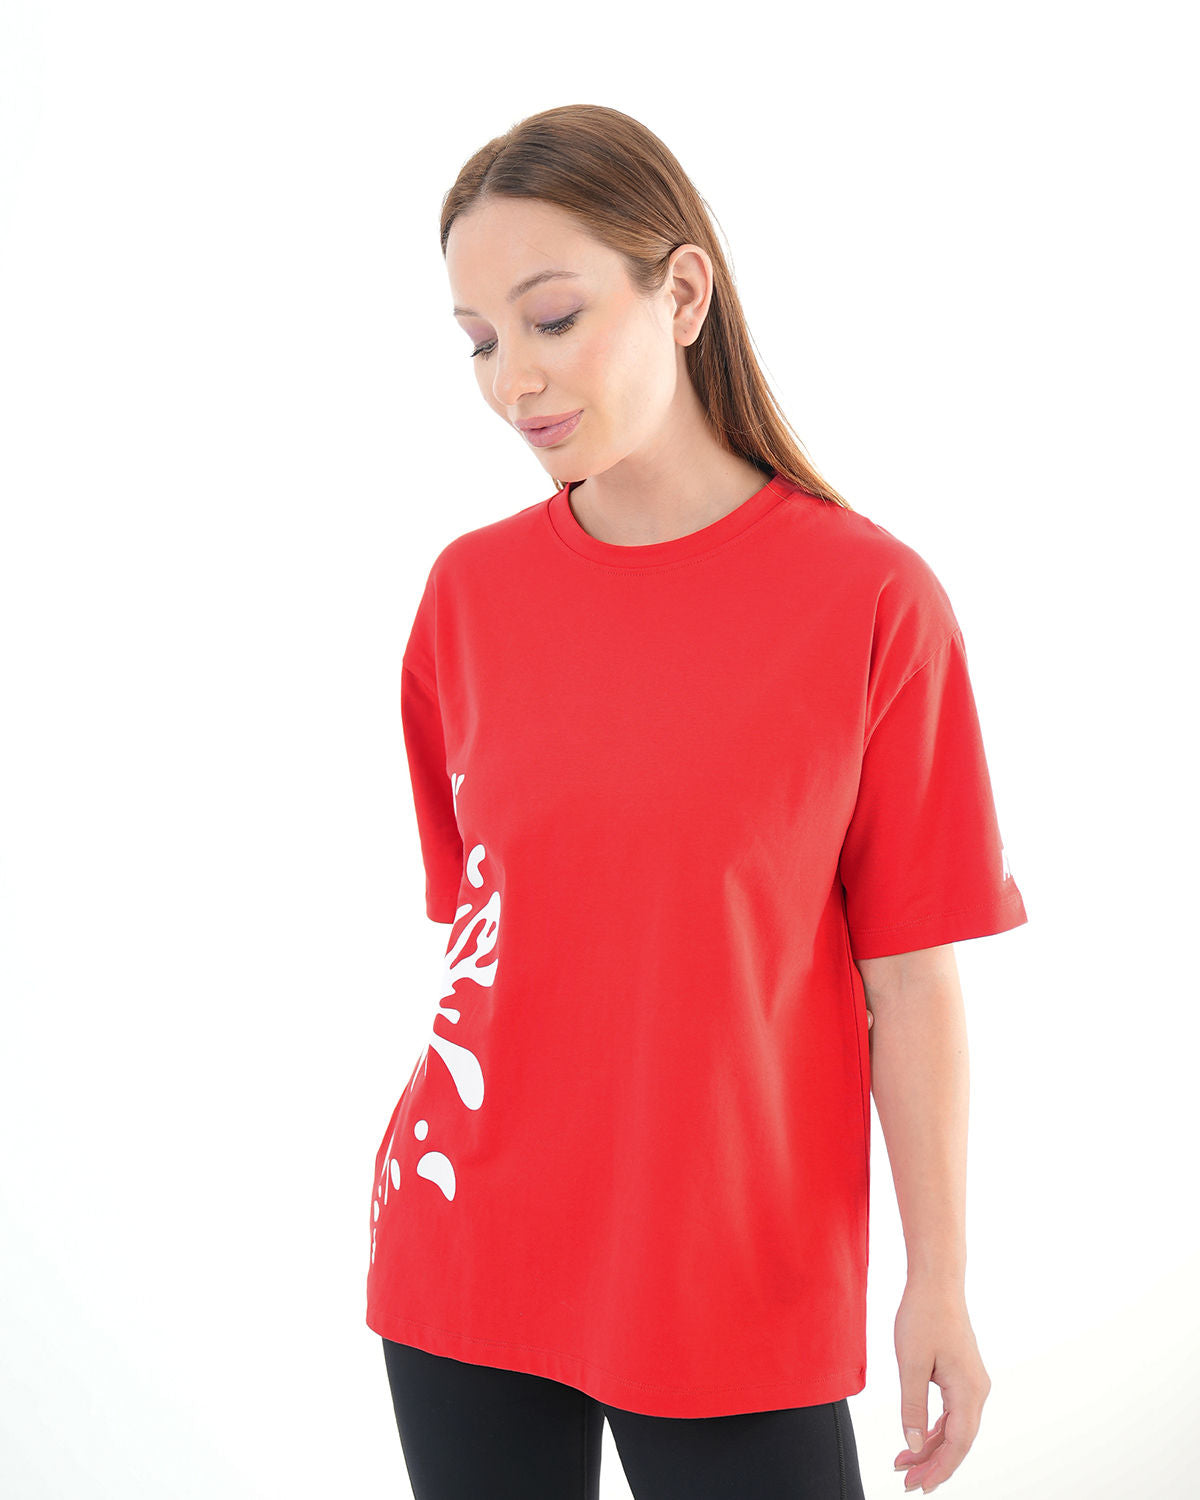 Oversized Splash Women's T-Shirt - Red with White print